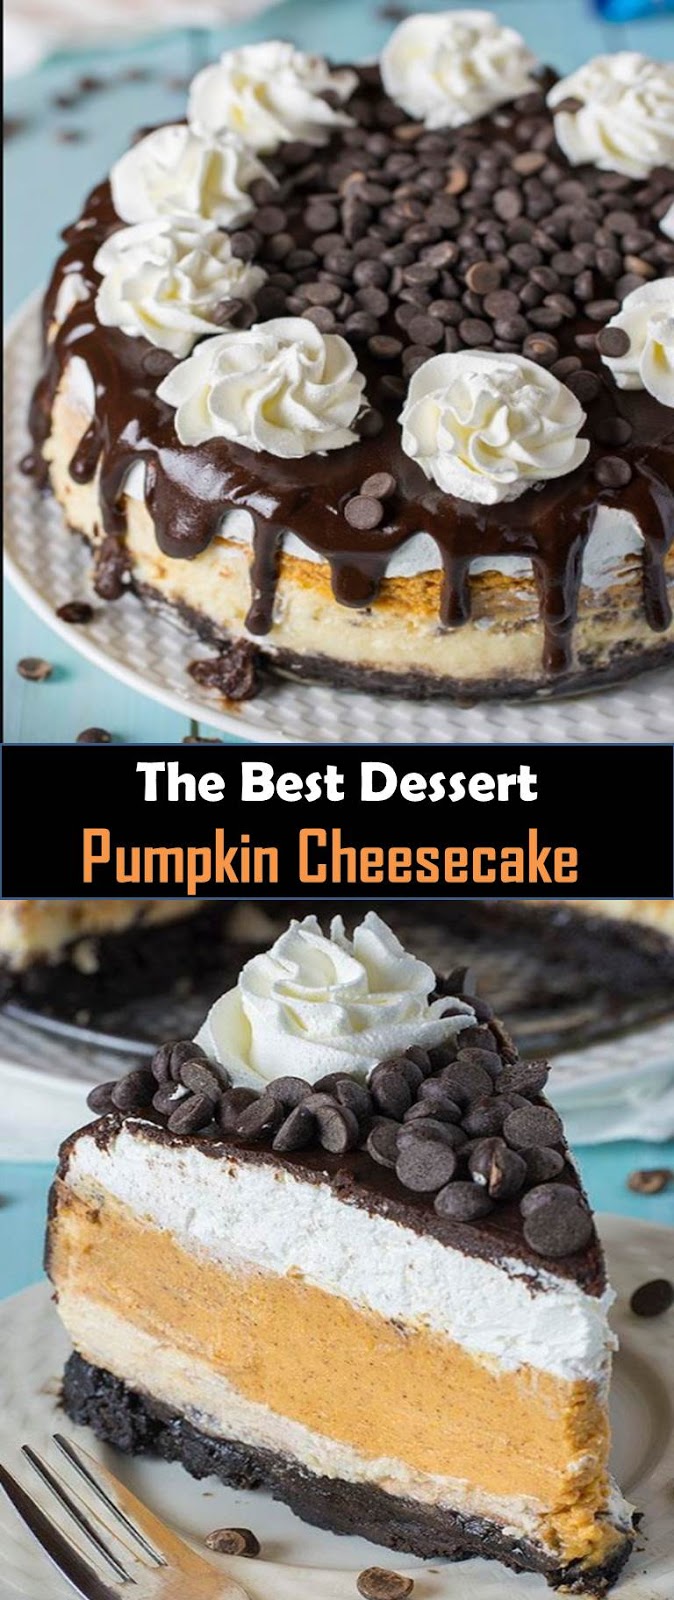 #Pumpkin #Cheesecake - .drinkdd30